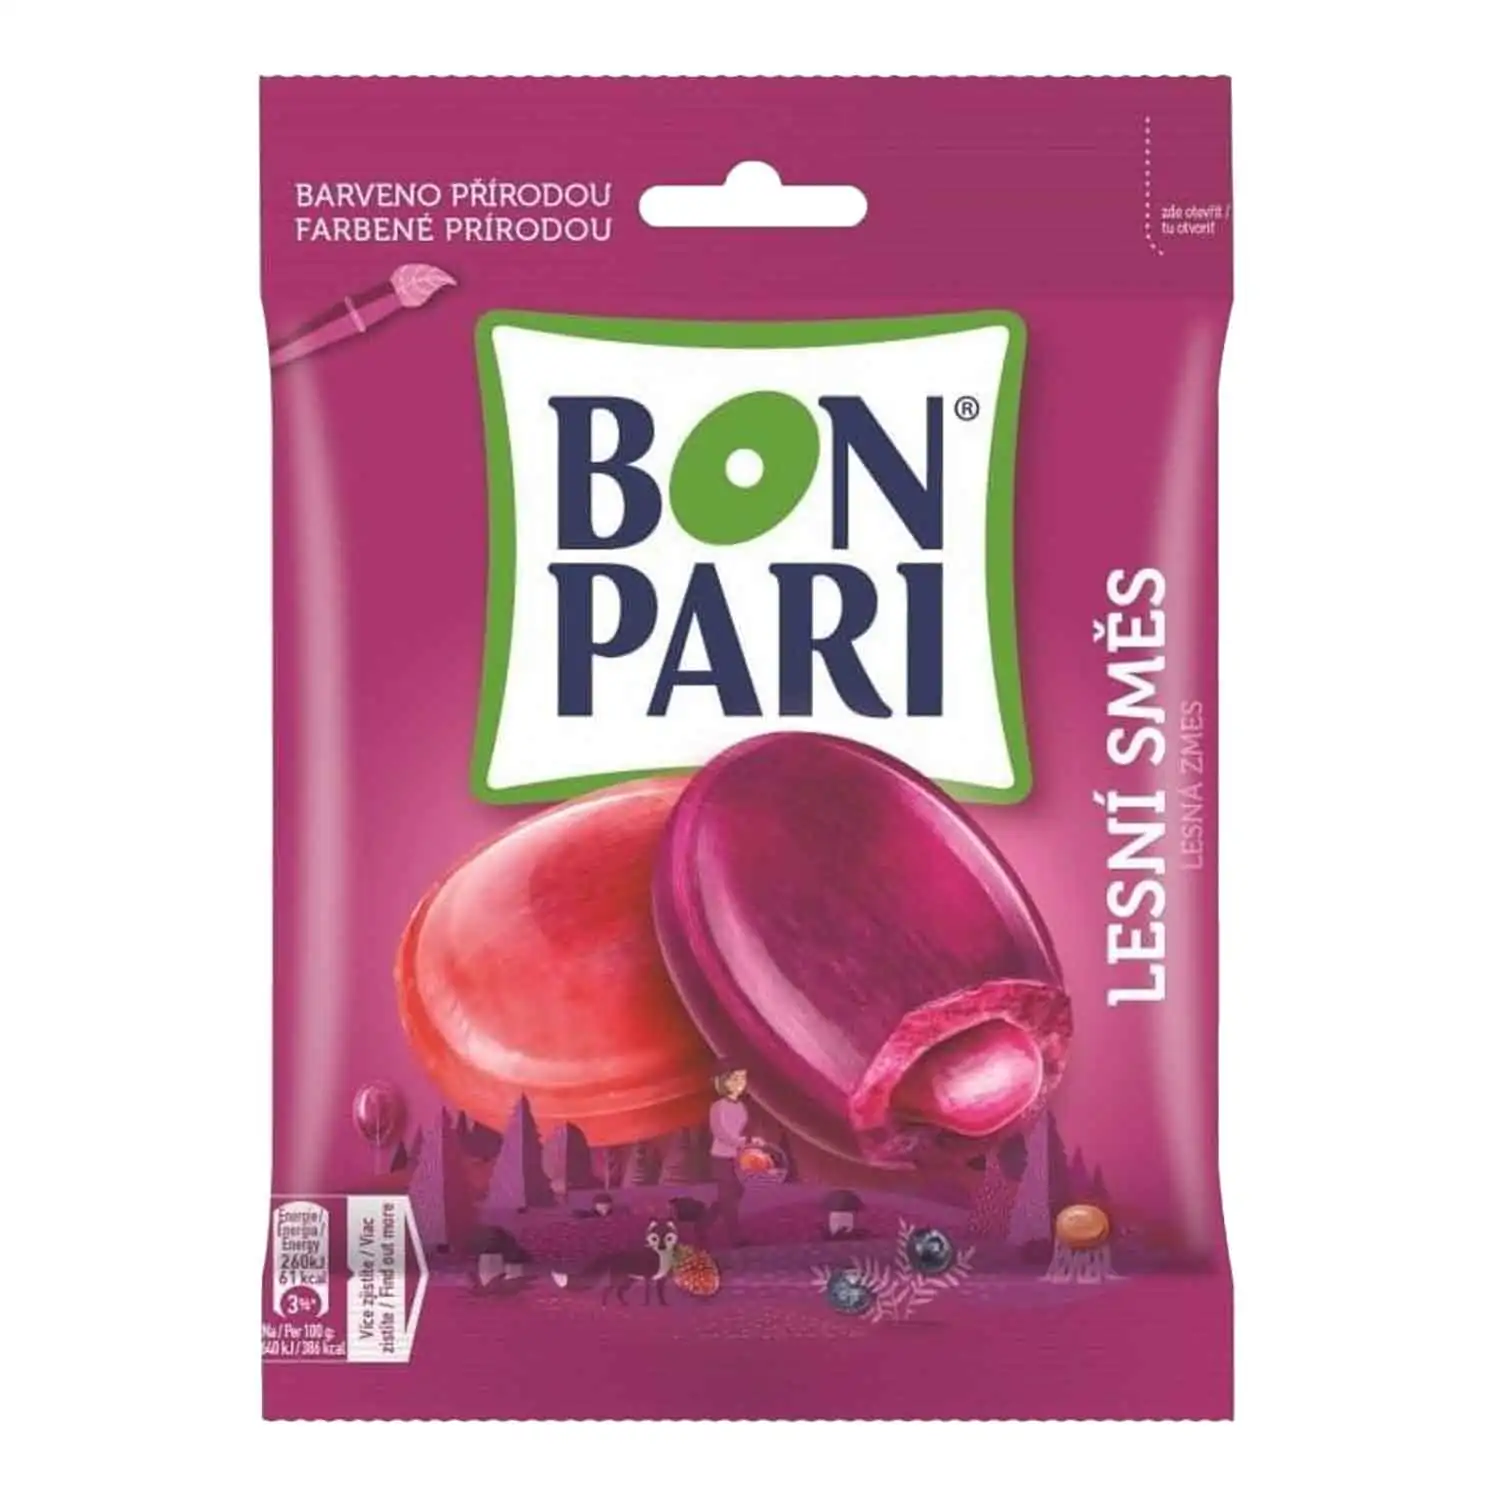 Bon Pari forest fruit 90g - Buy at Real Tobacco